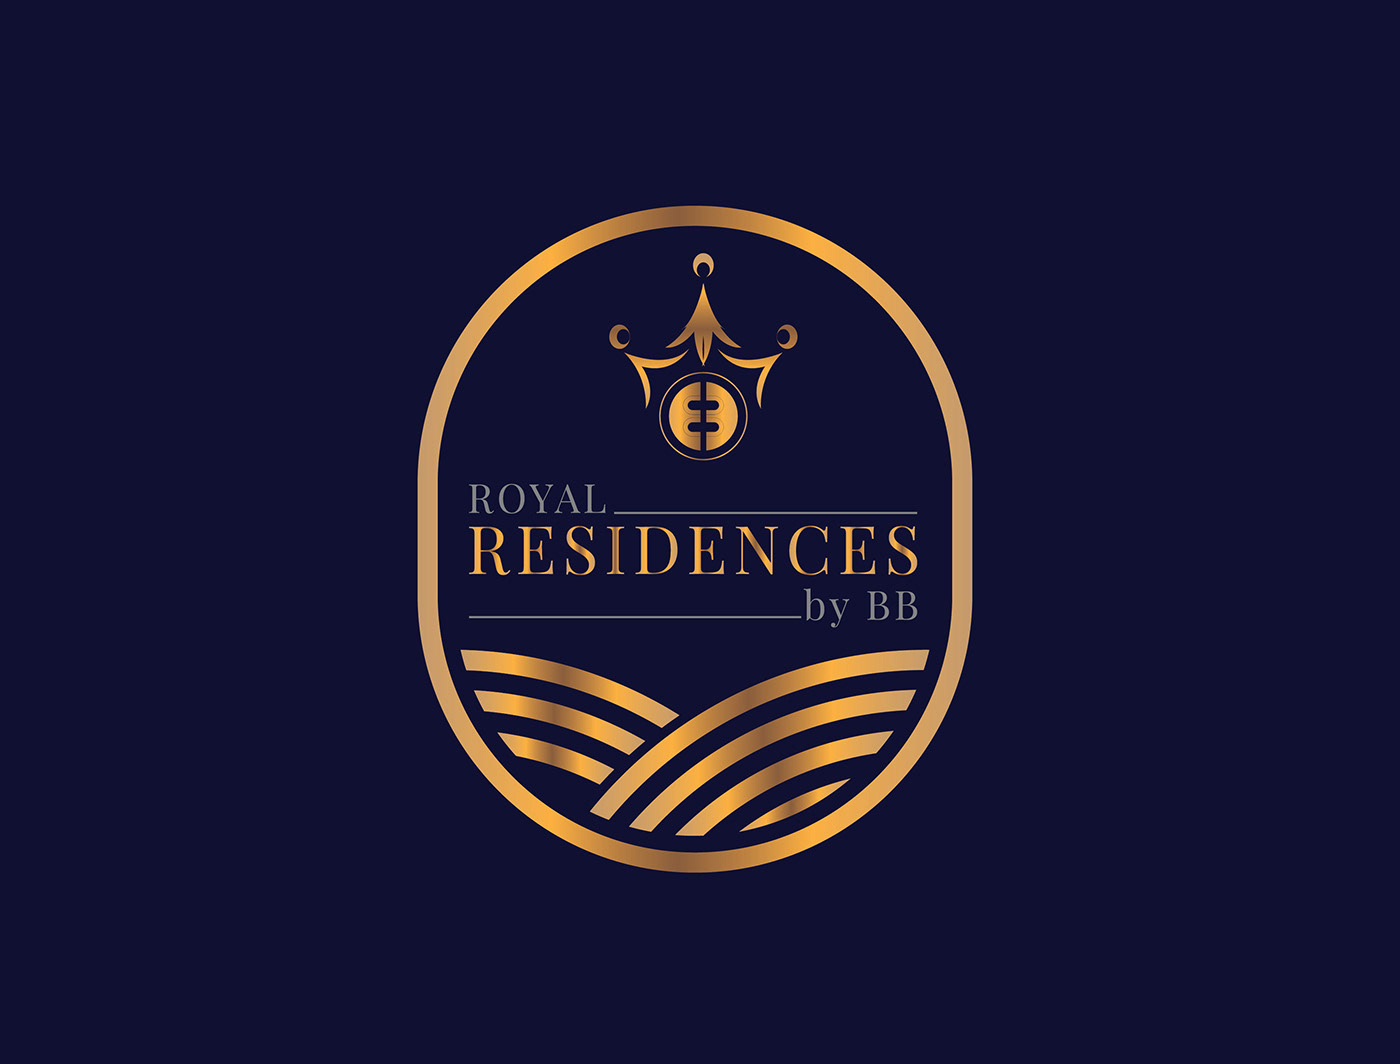 home hotel houe residences resort royal Royal_residences Travel